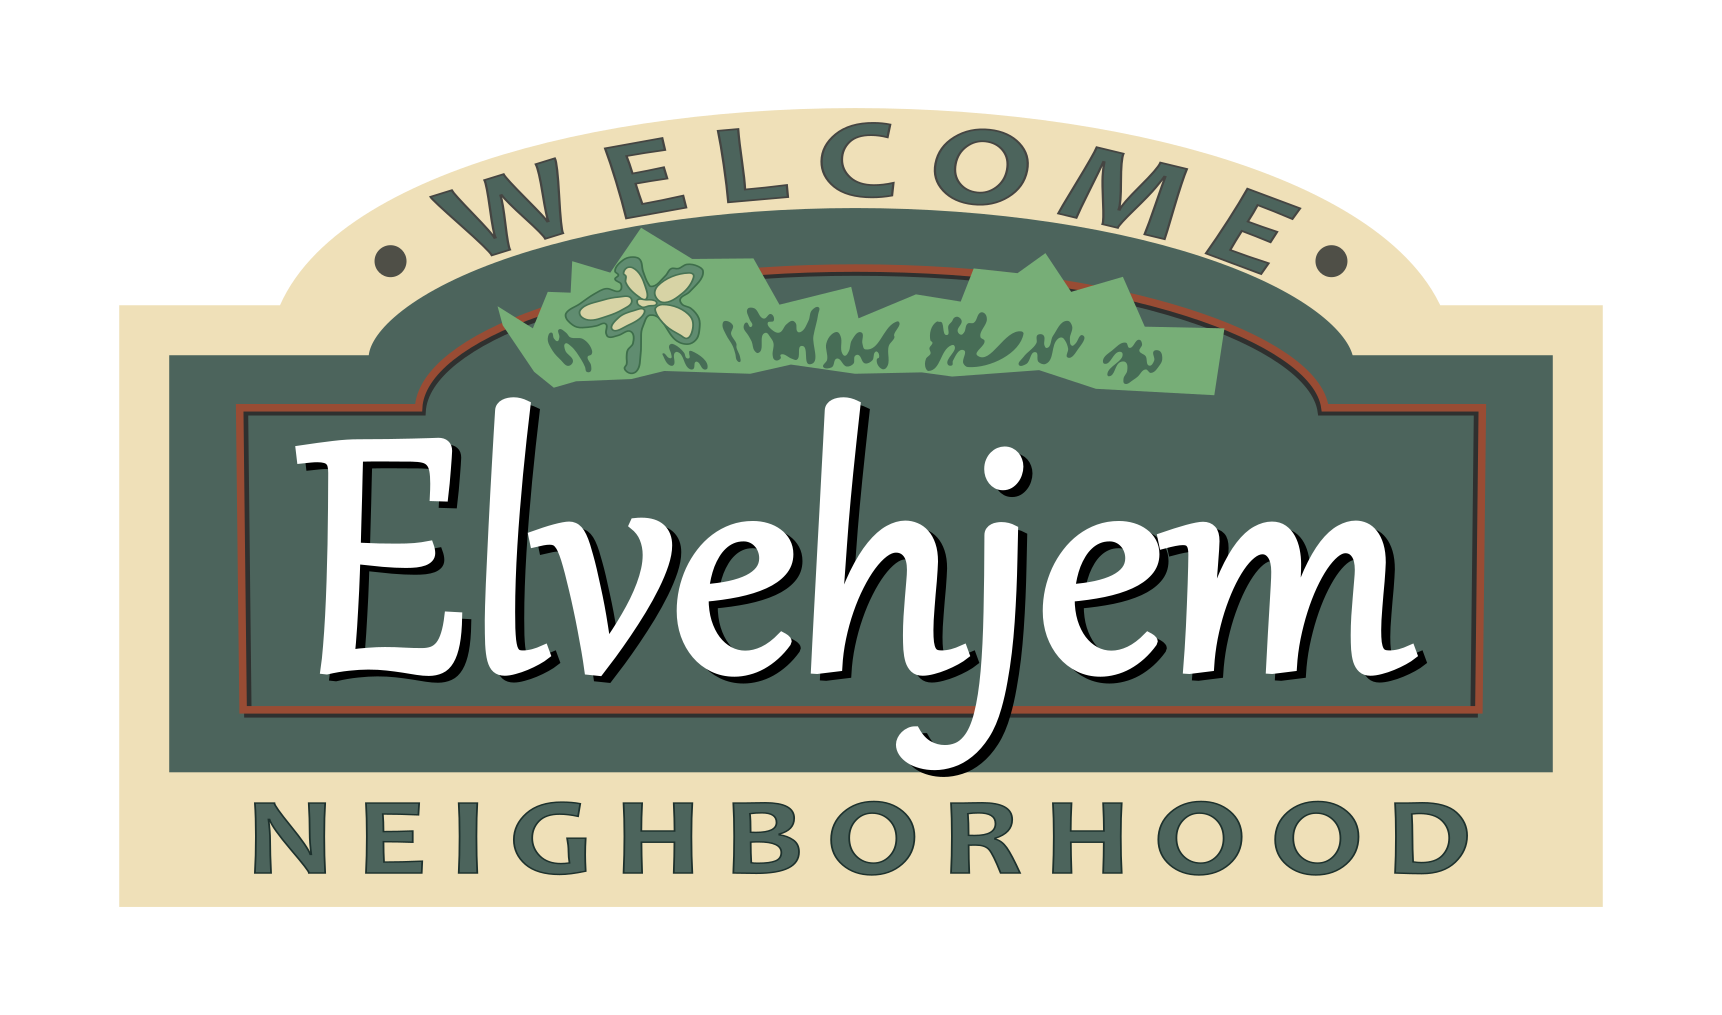 Elvehjem Neighborhood is a Family Delight